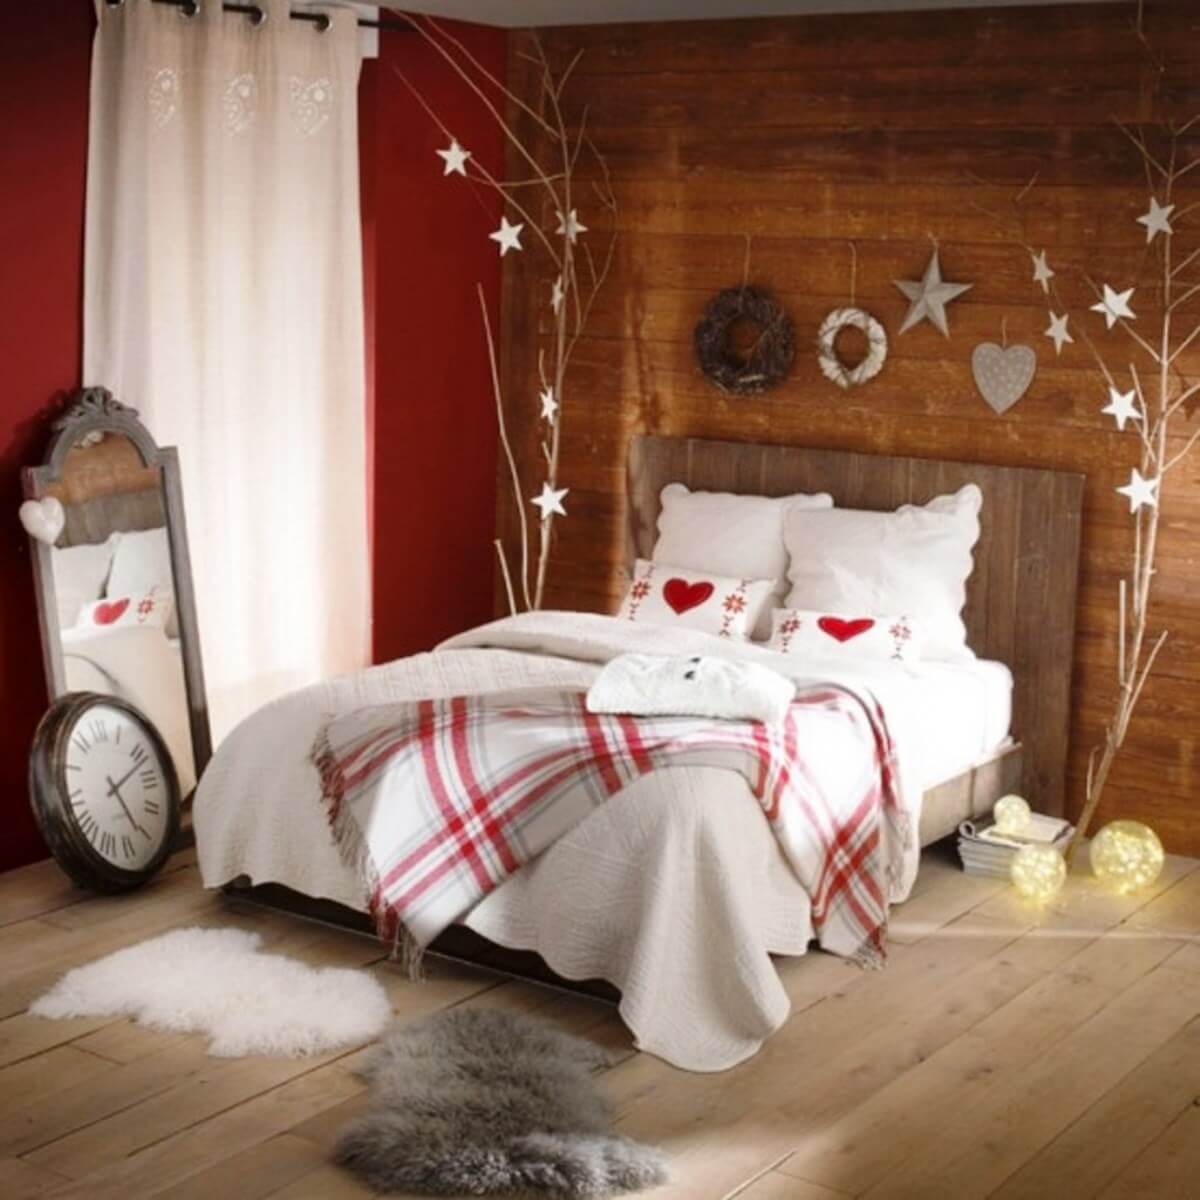 2.christmas Bedroom Decorations Ideas 